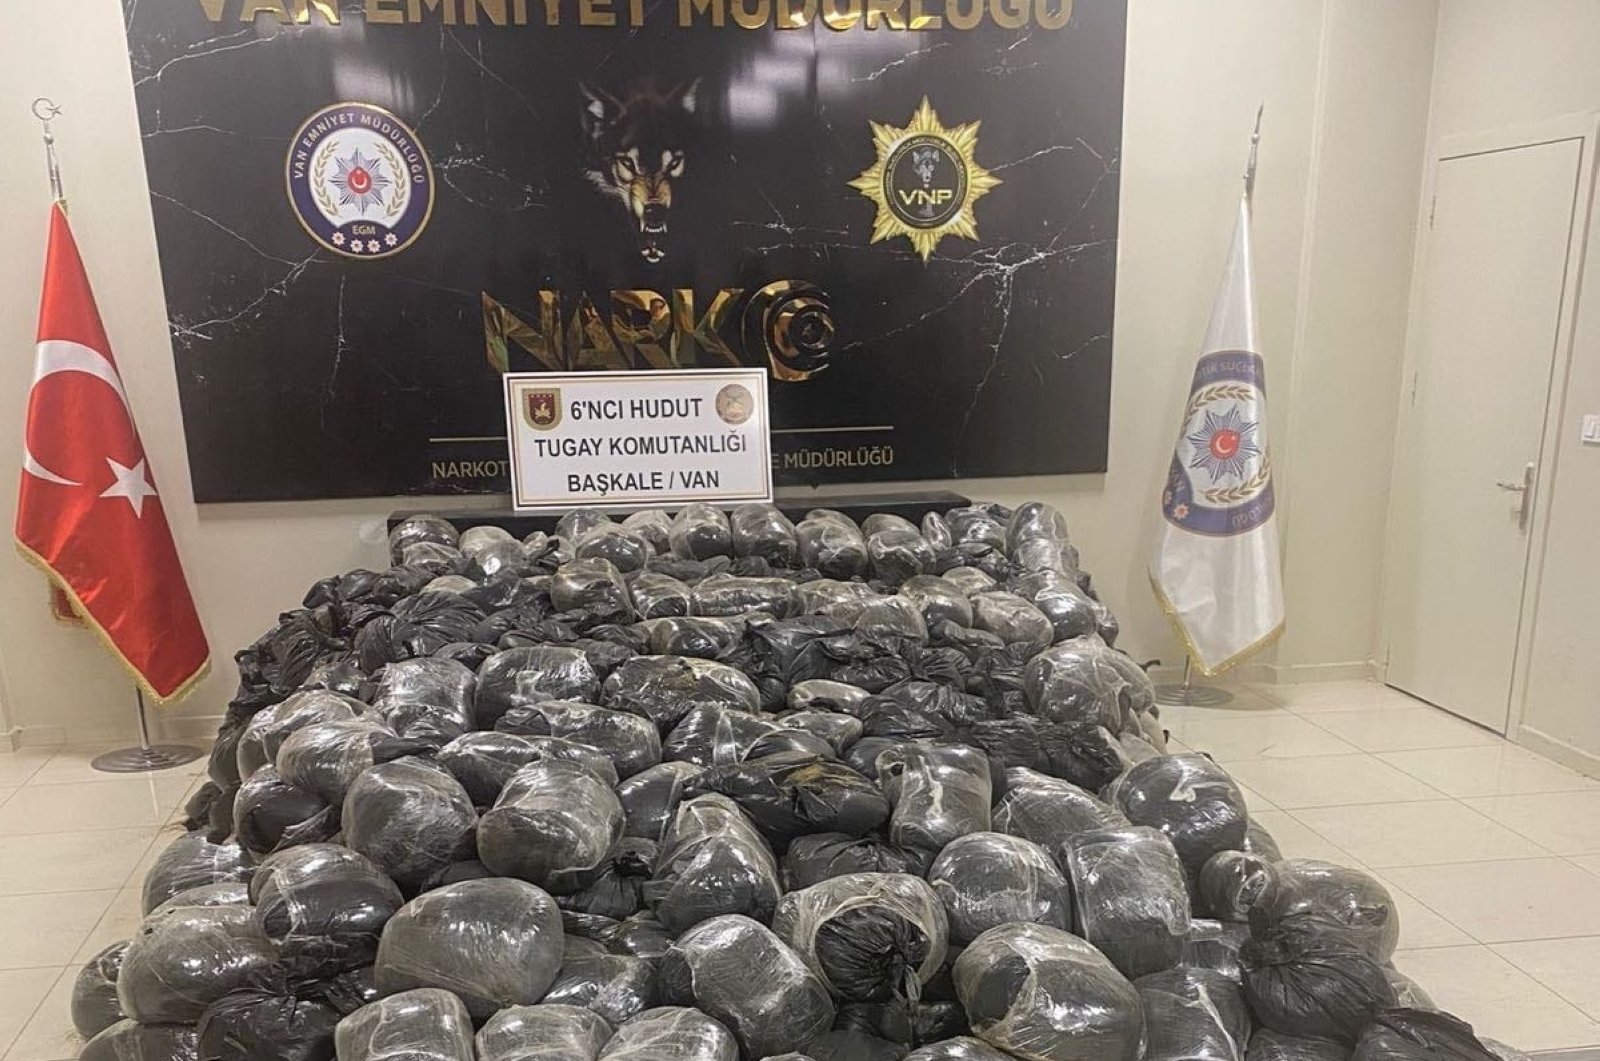 Over 2 tons of cannabis powder seized at Türkiye's Van border